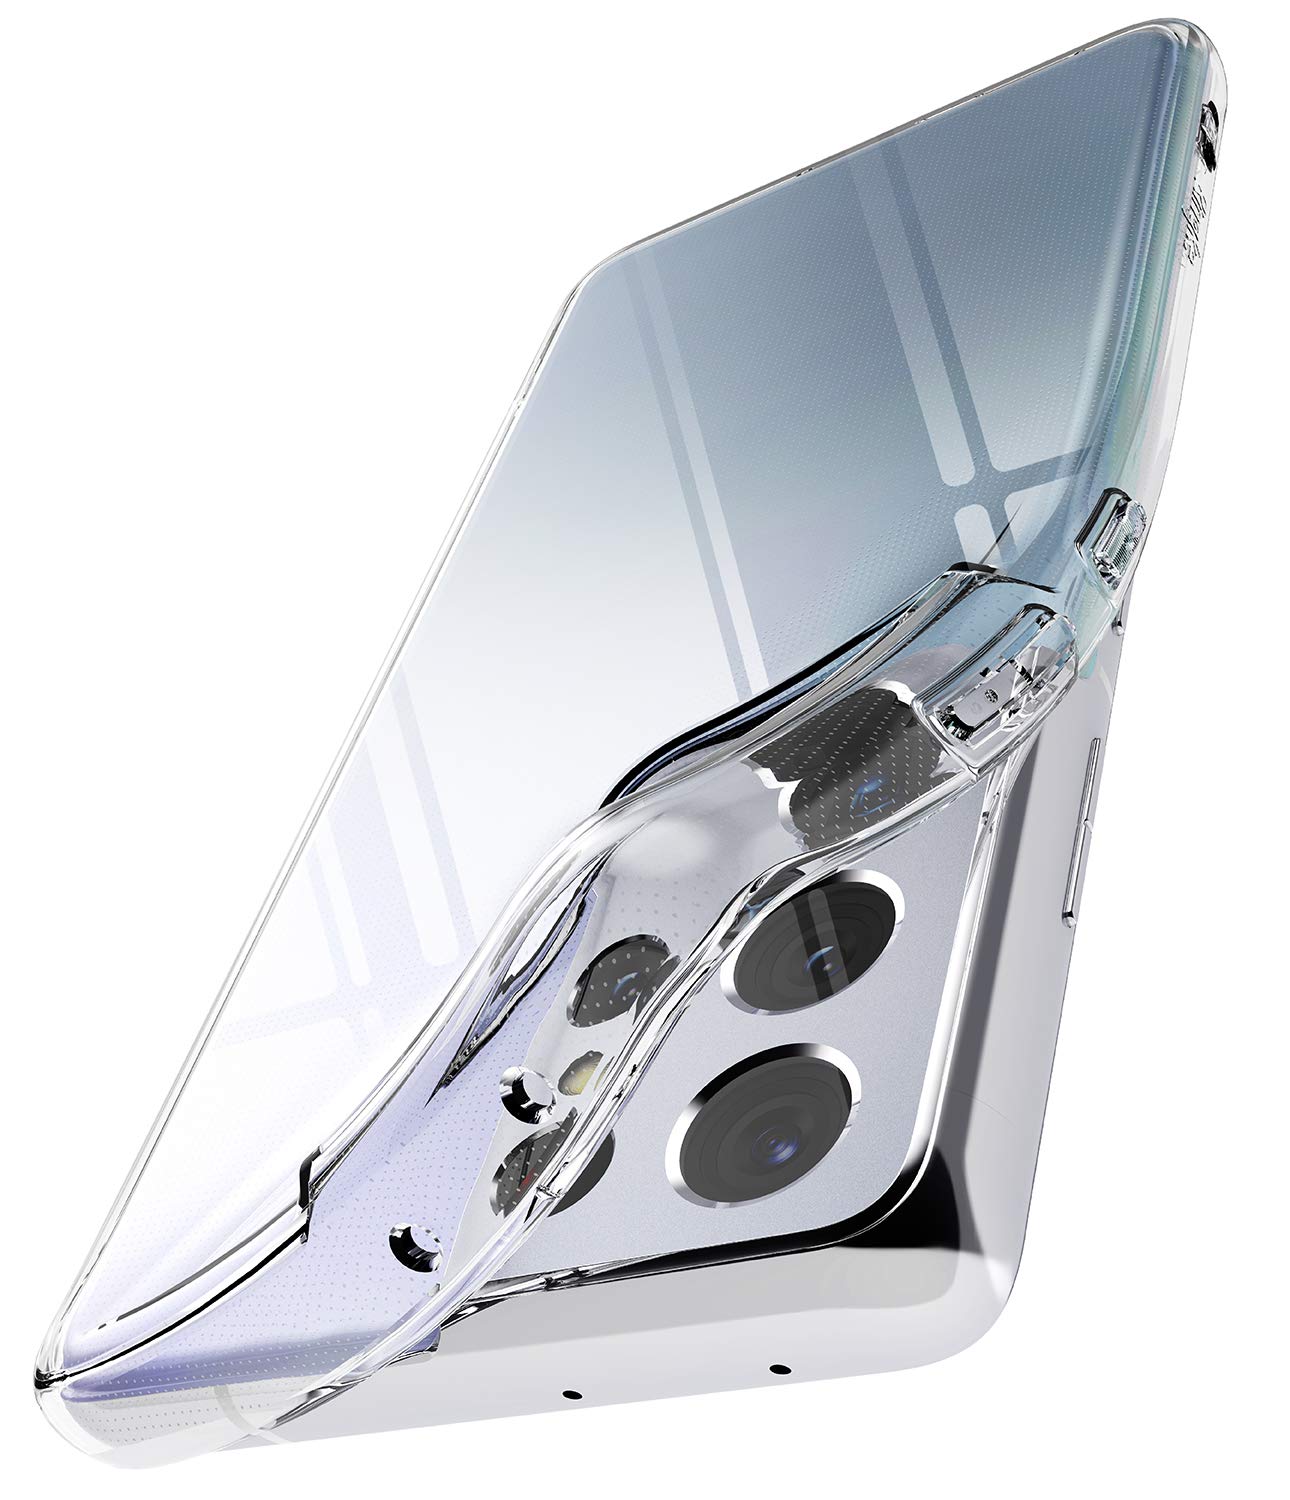 Case For Samsung Galaxy S21 Ultra Case, Samsung S21 Ultra Case 5g